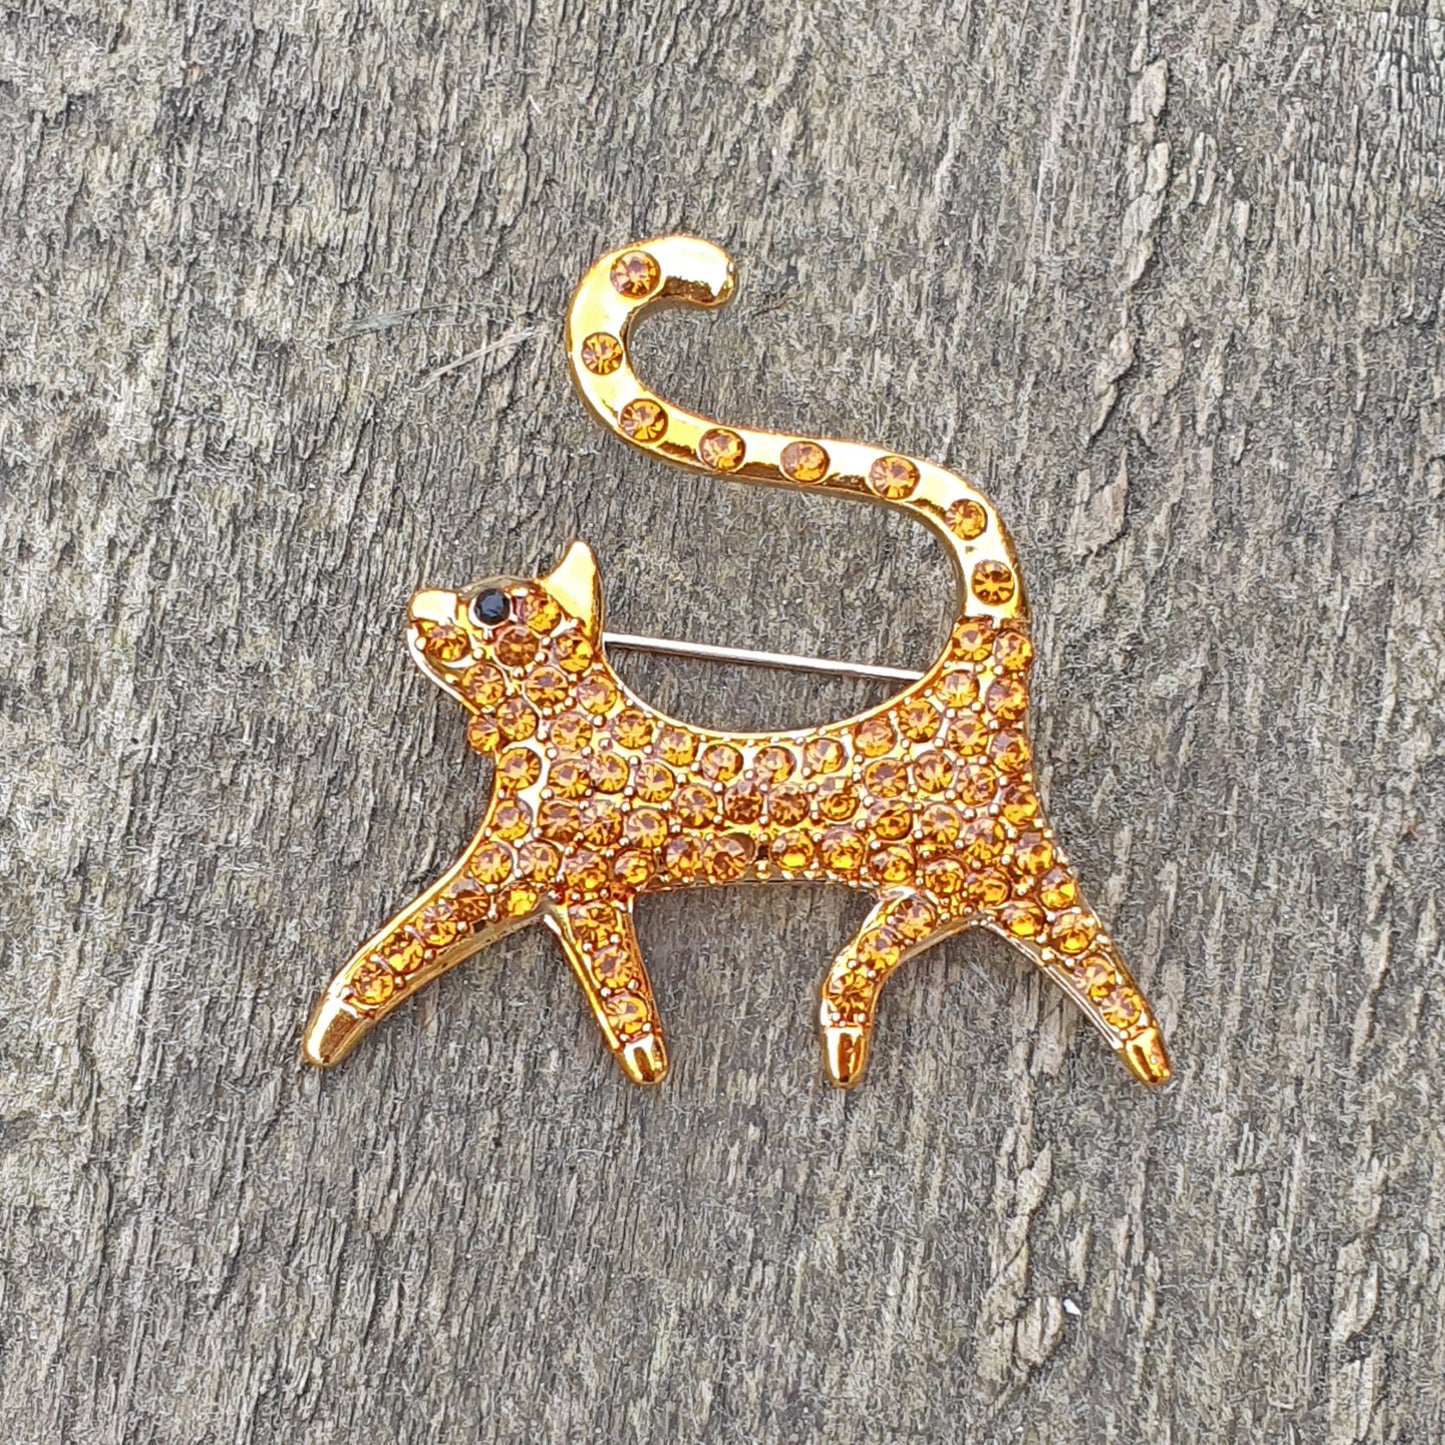 Gold diamante cat brooch